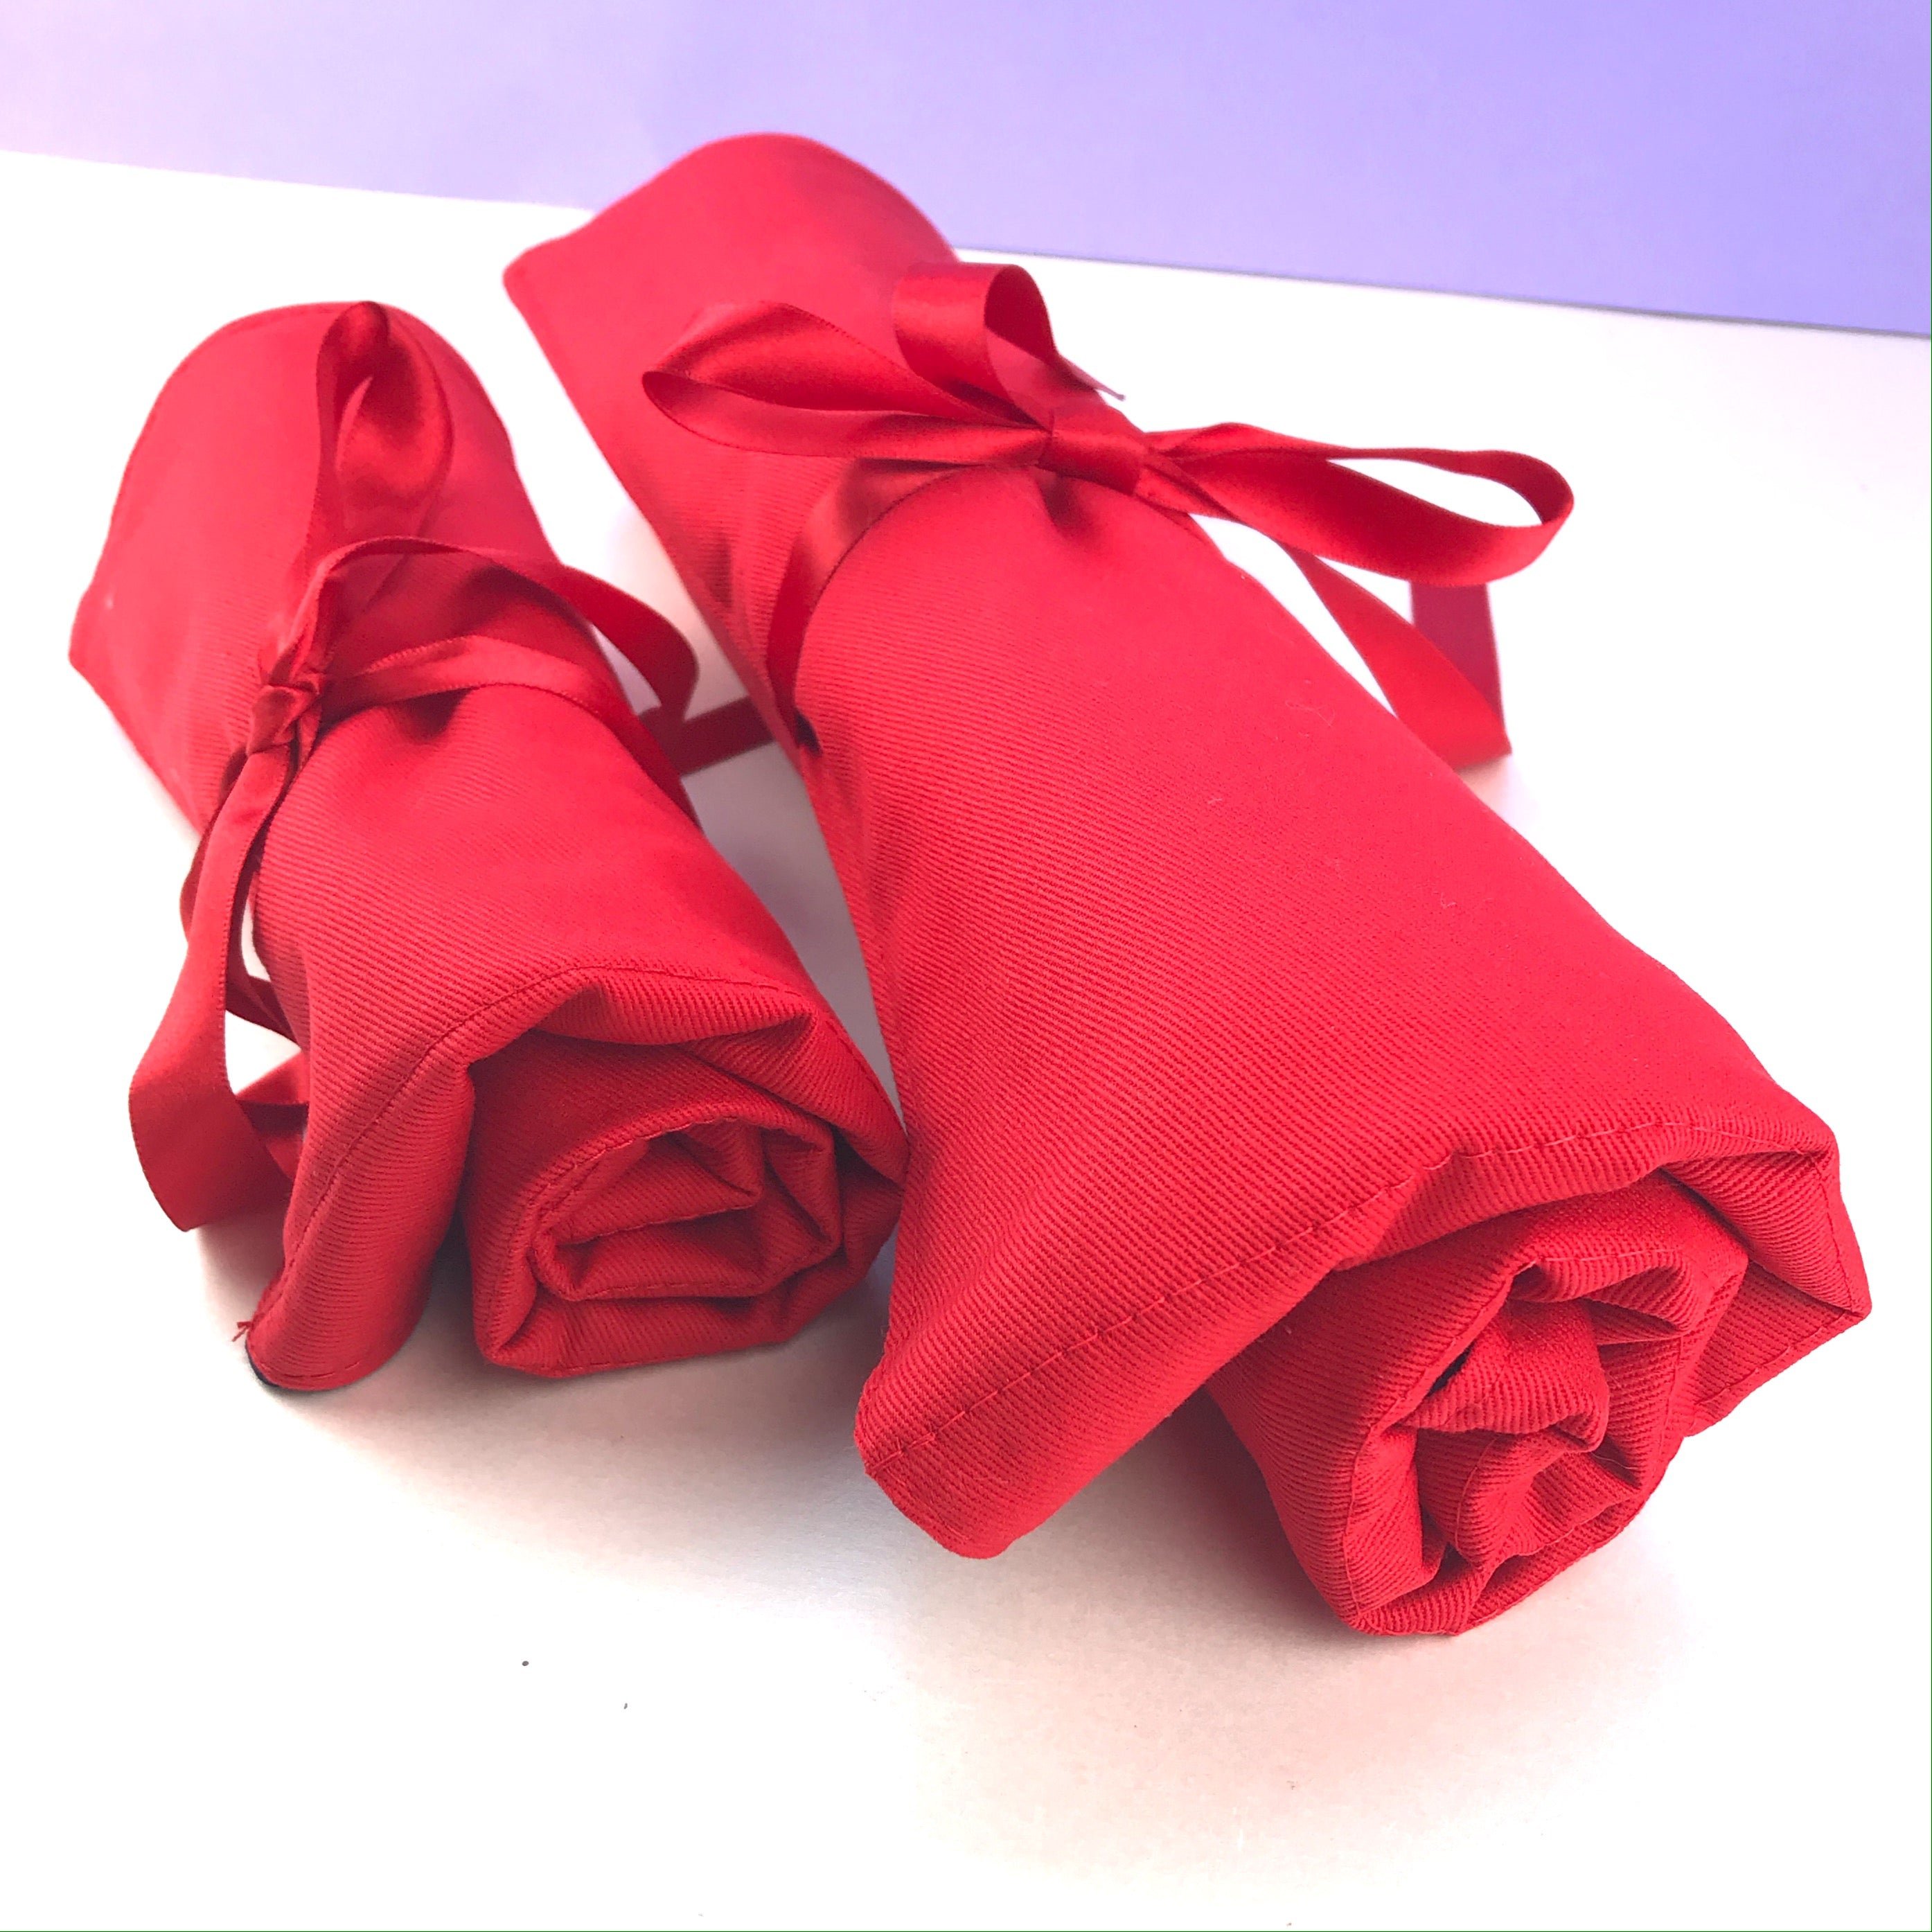 Knitting needles or crochet hook rolls in red poppy